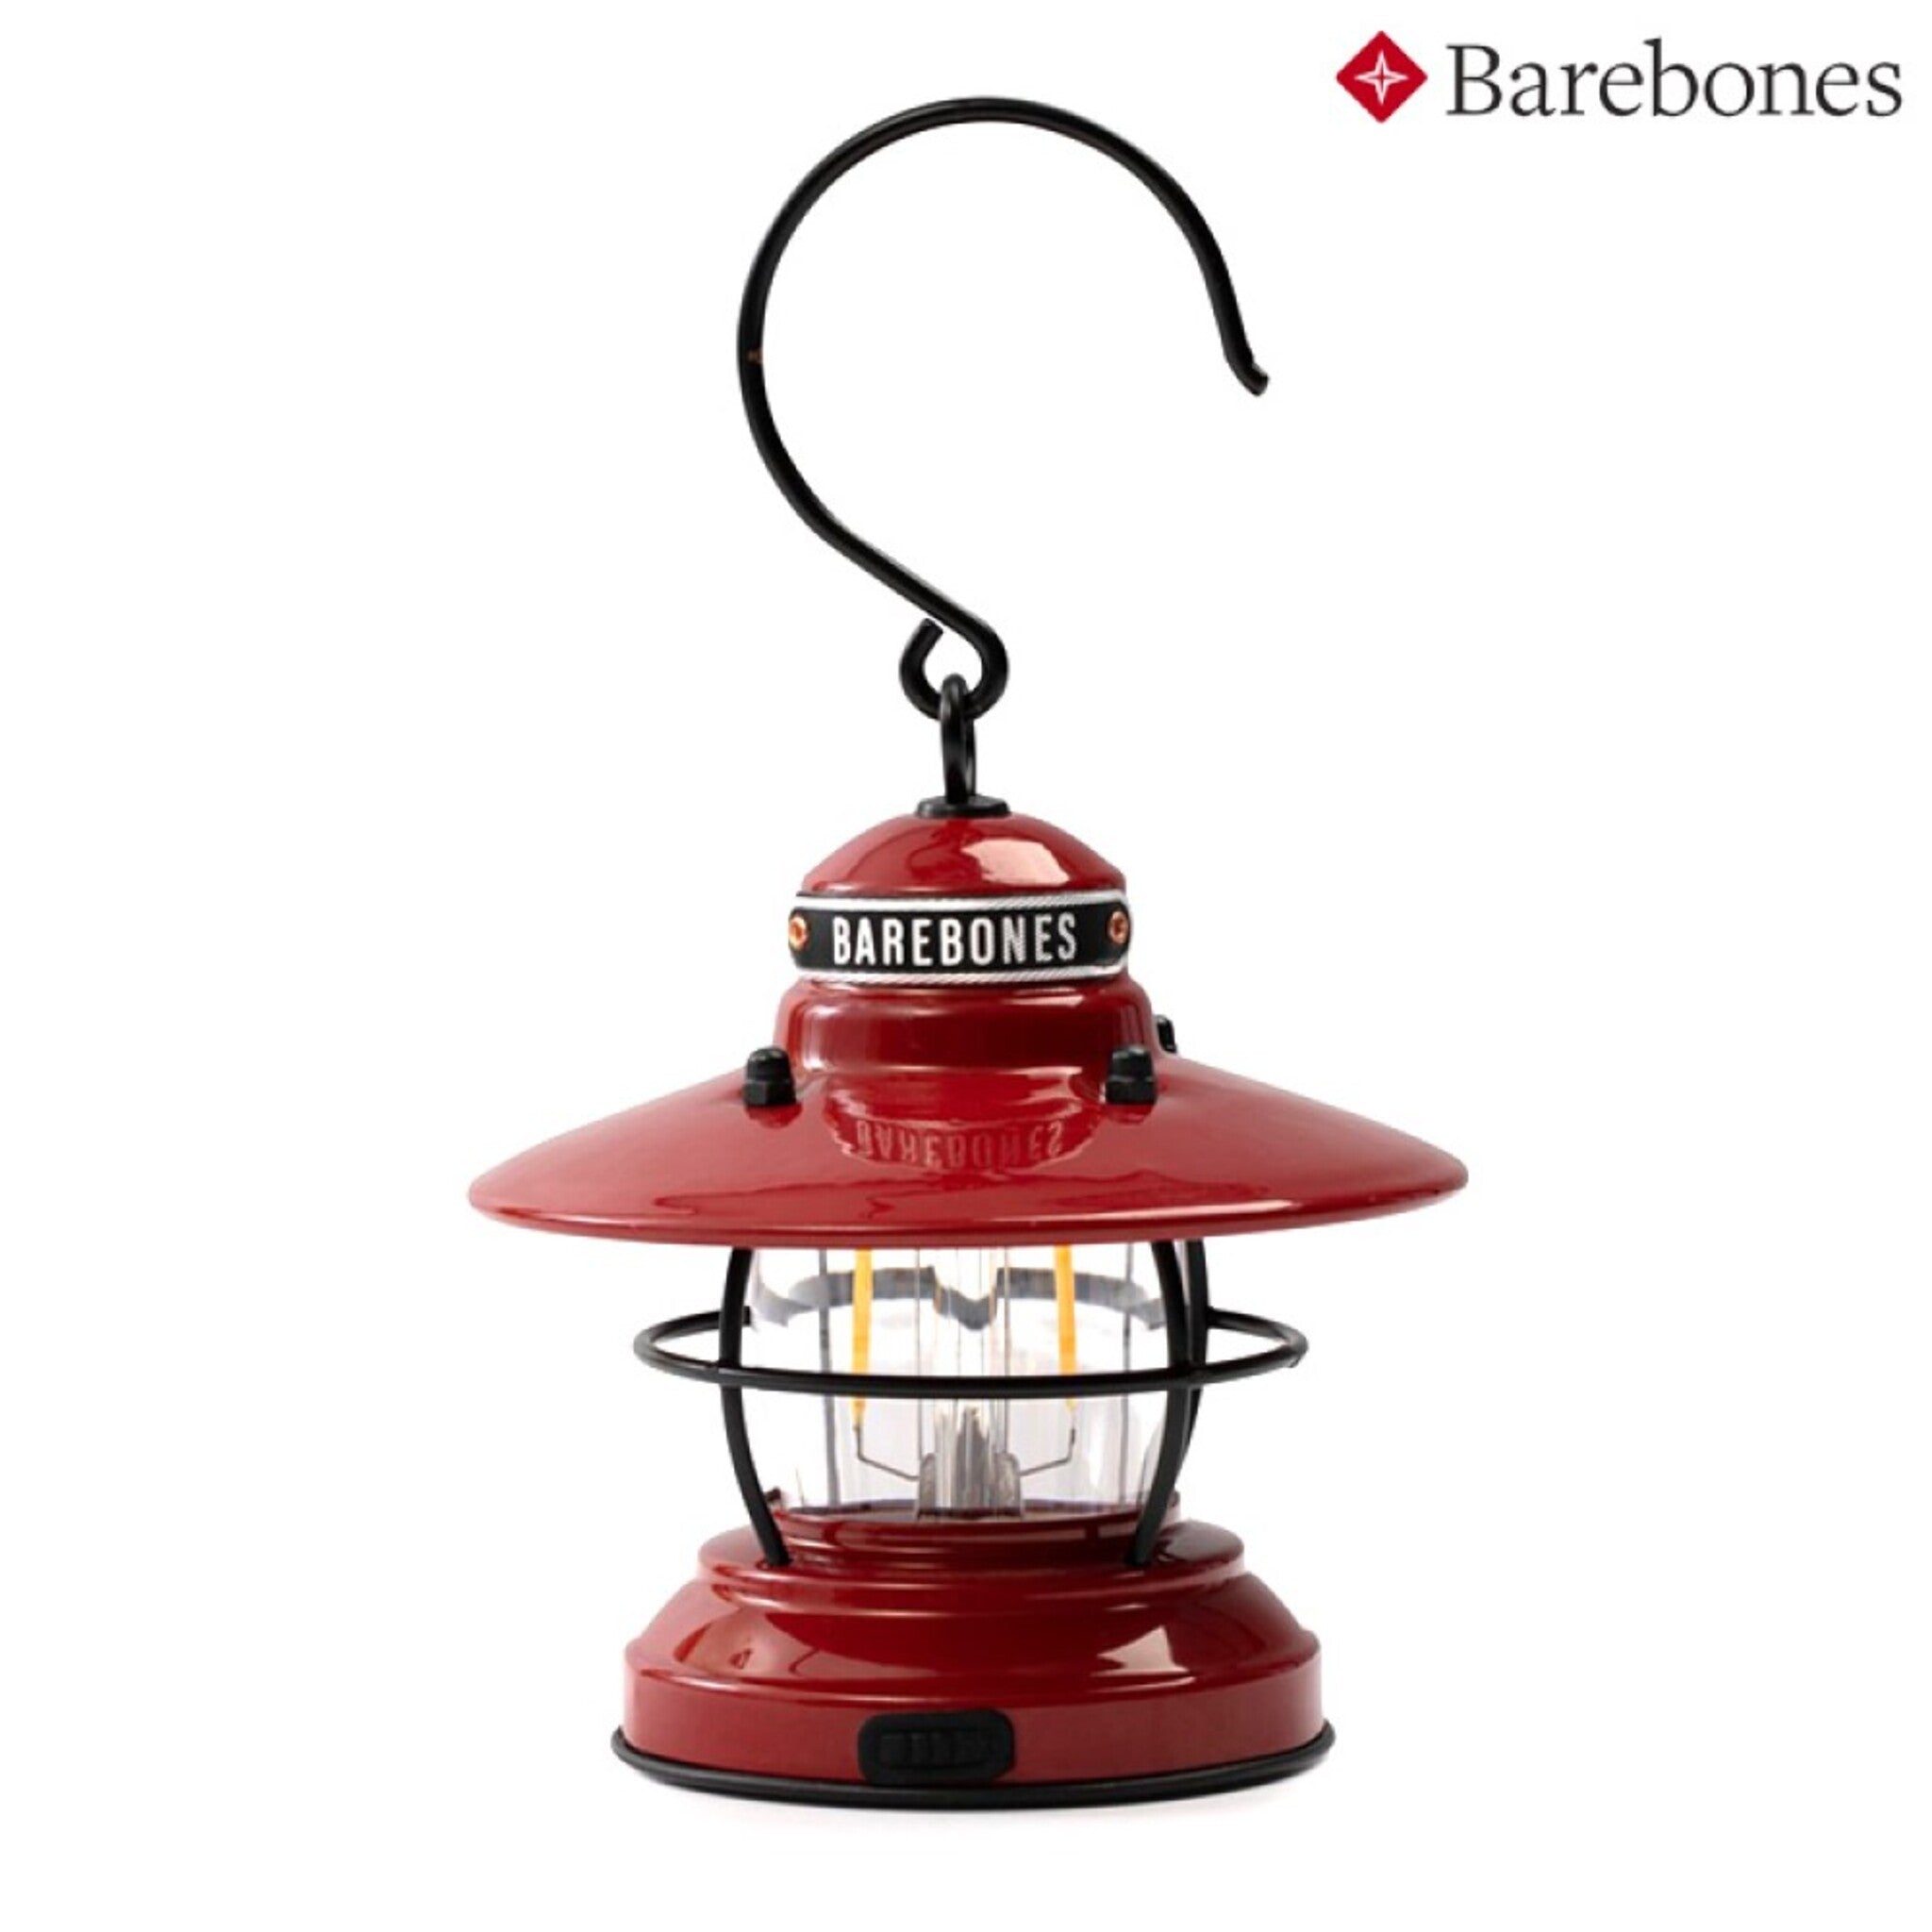 Barebones Edison Mini Lantern 平放/吊掛營燈 紅色 LIV-274